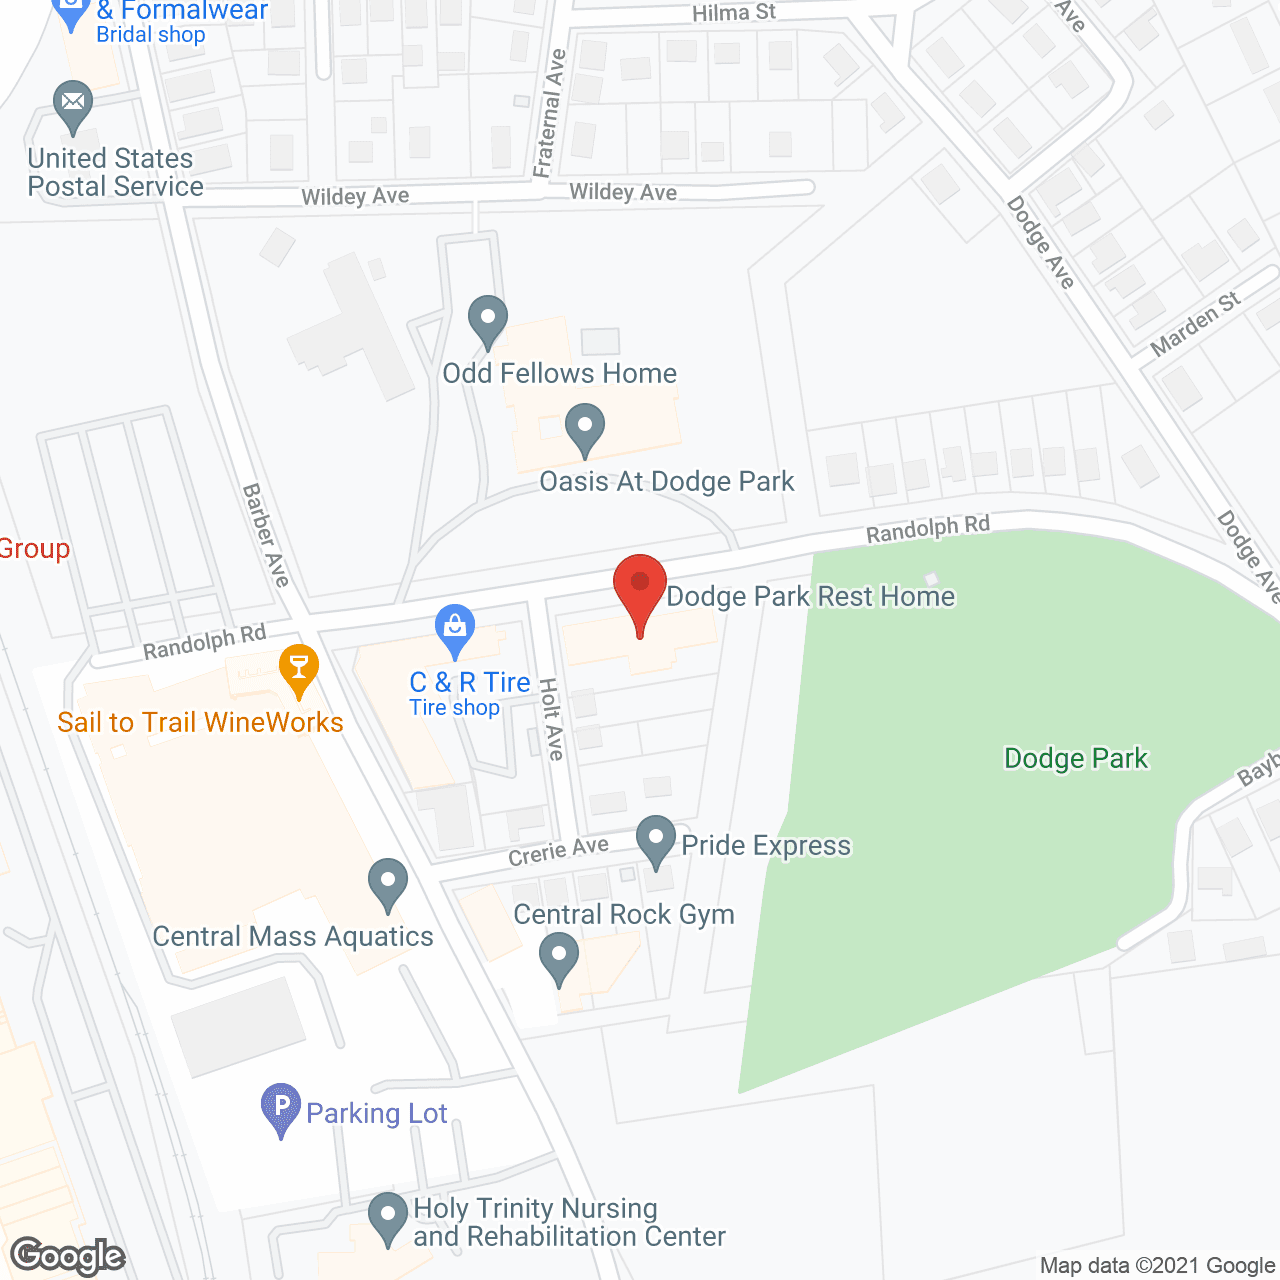 Dodge Park Rest Home in google map